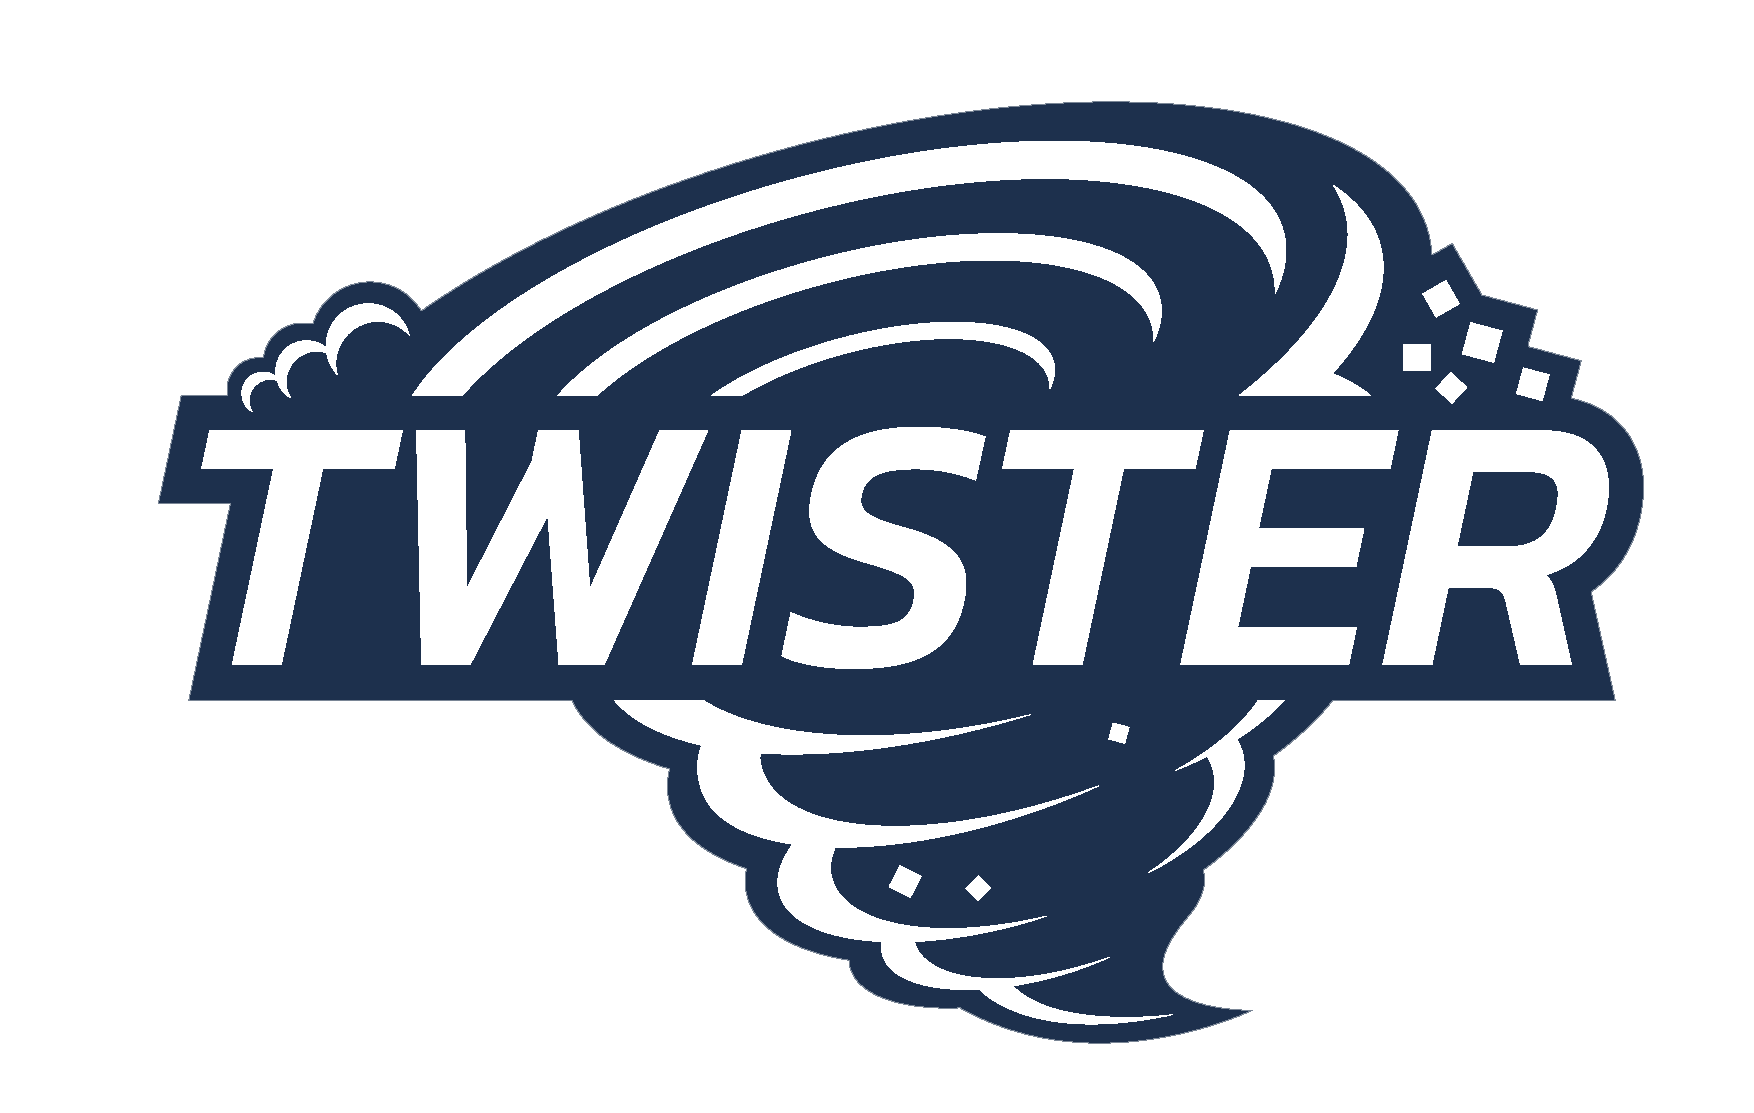 Twister Text Logo PNG HD Images pngteam.com